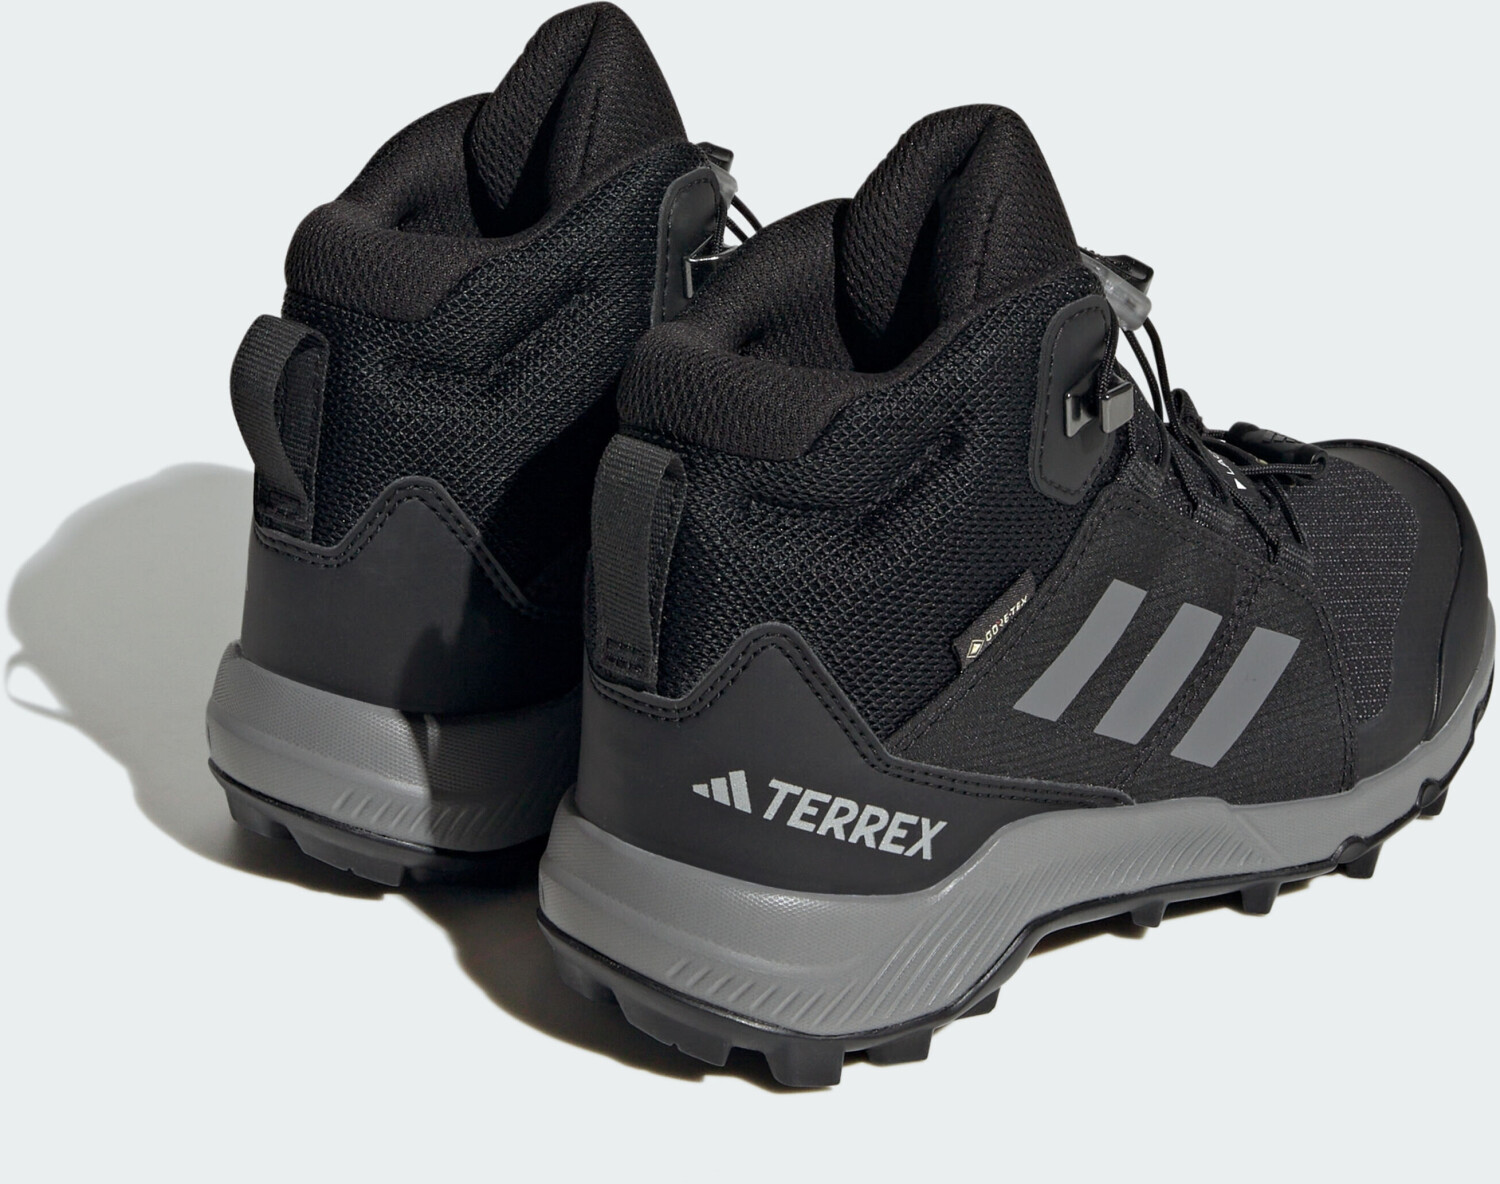 Adidas Organizer Mid GTX Kids core black/grey three/core black ab 65,89 € |  Preisvergleich bei